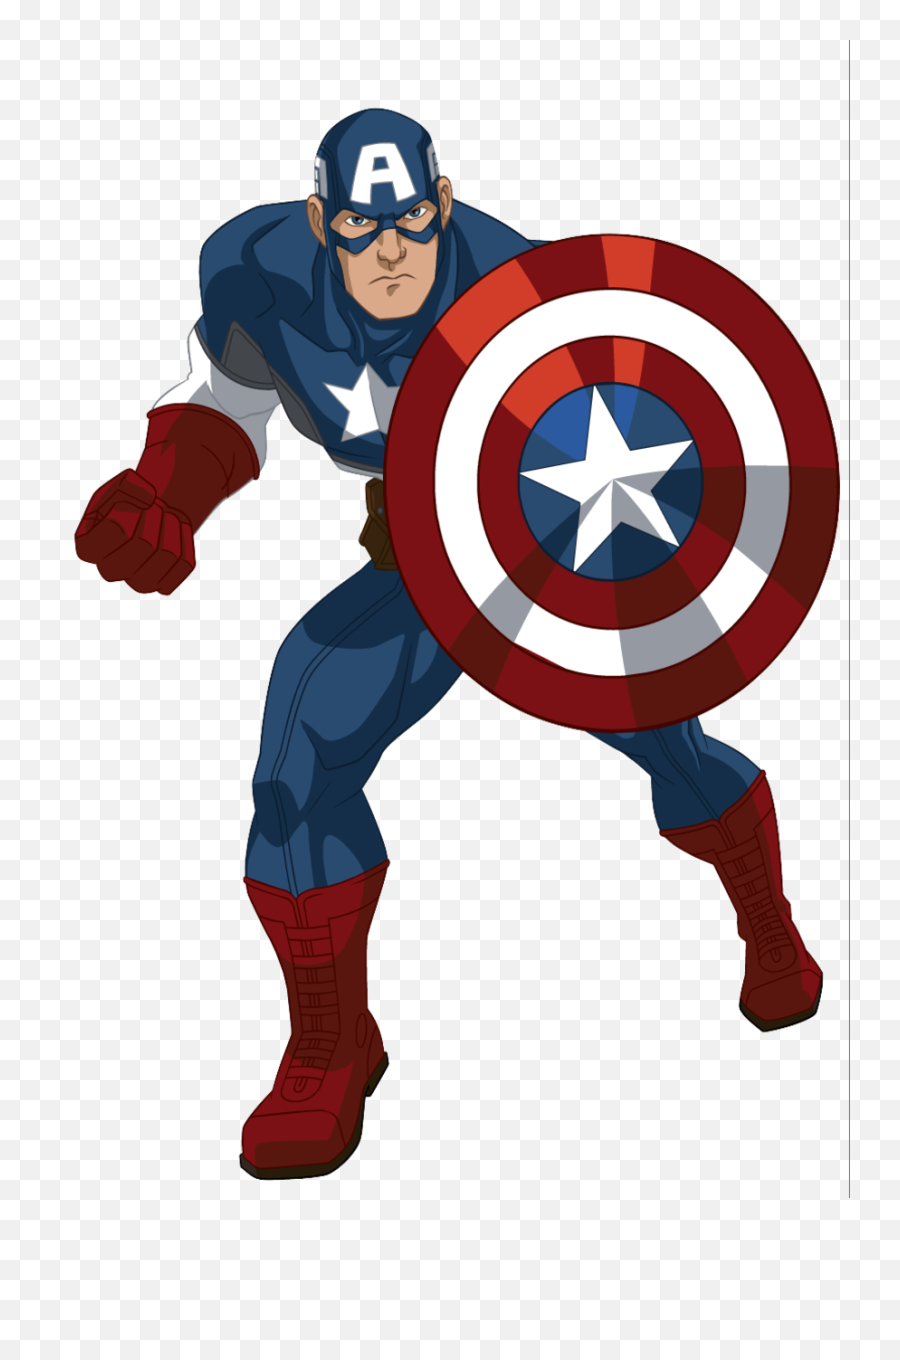 Captain America Comic Png 6 Image - Marvel Avengers Assemble Captain America,Captain America Comic Png